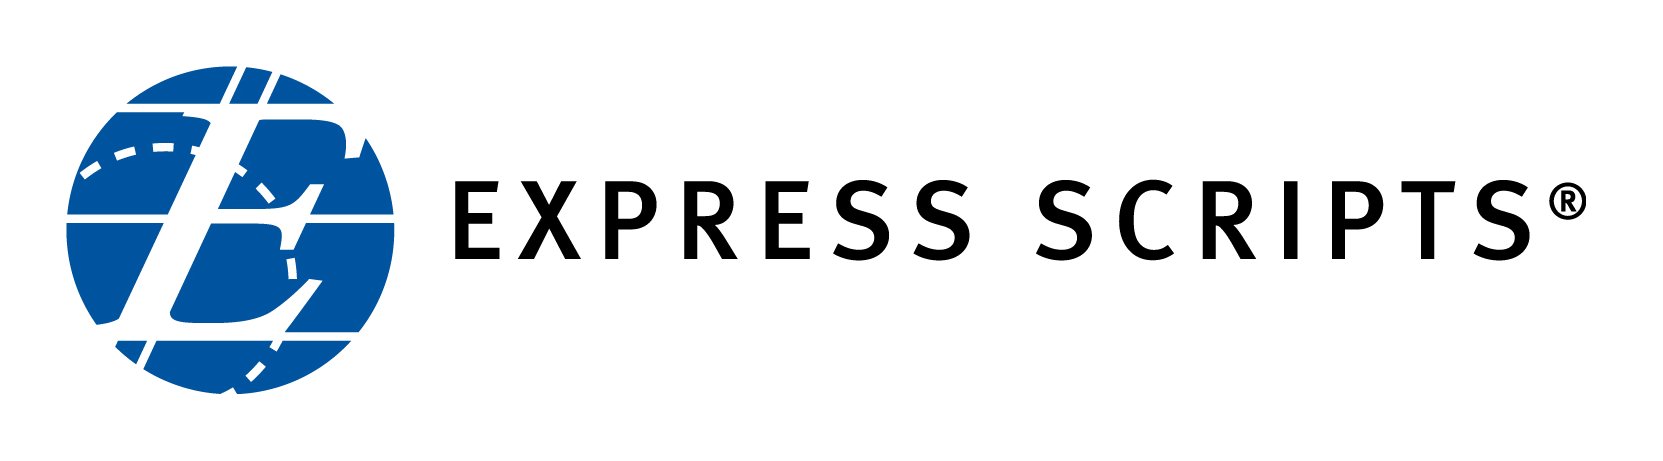 Express Scripts Holding Logo